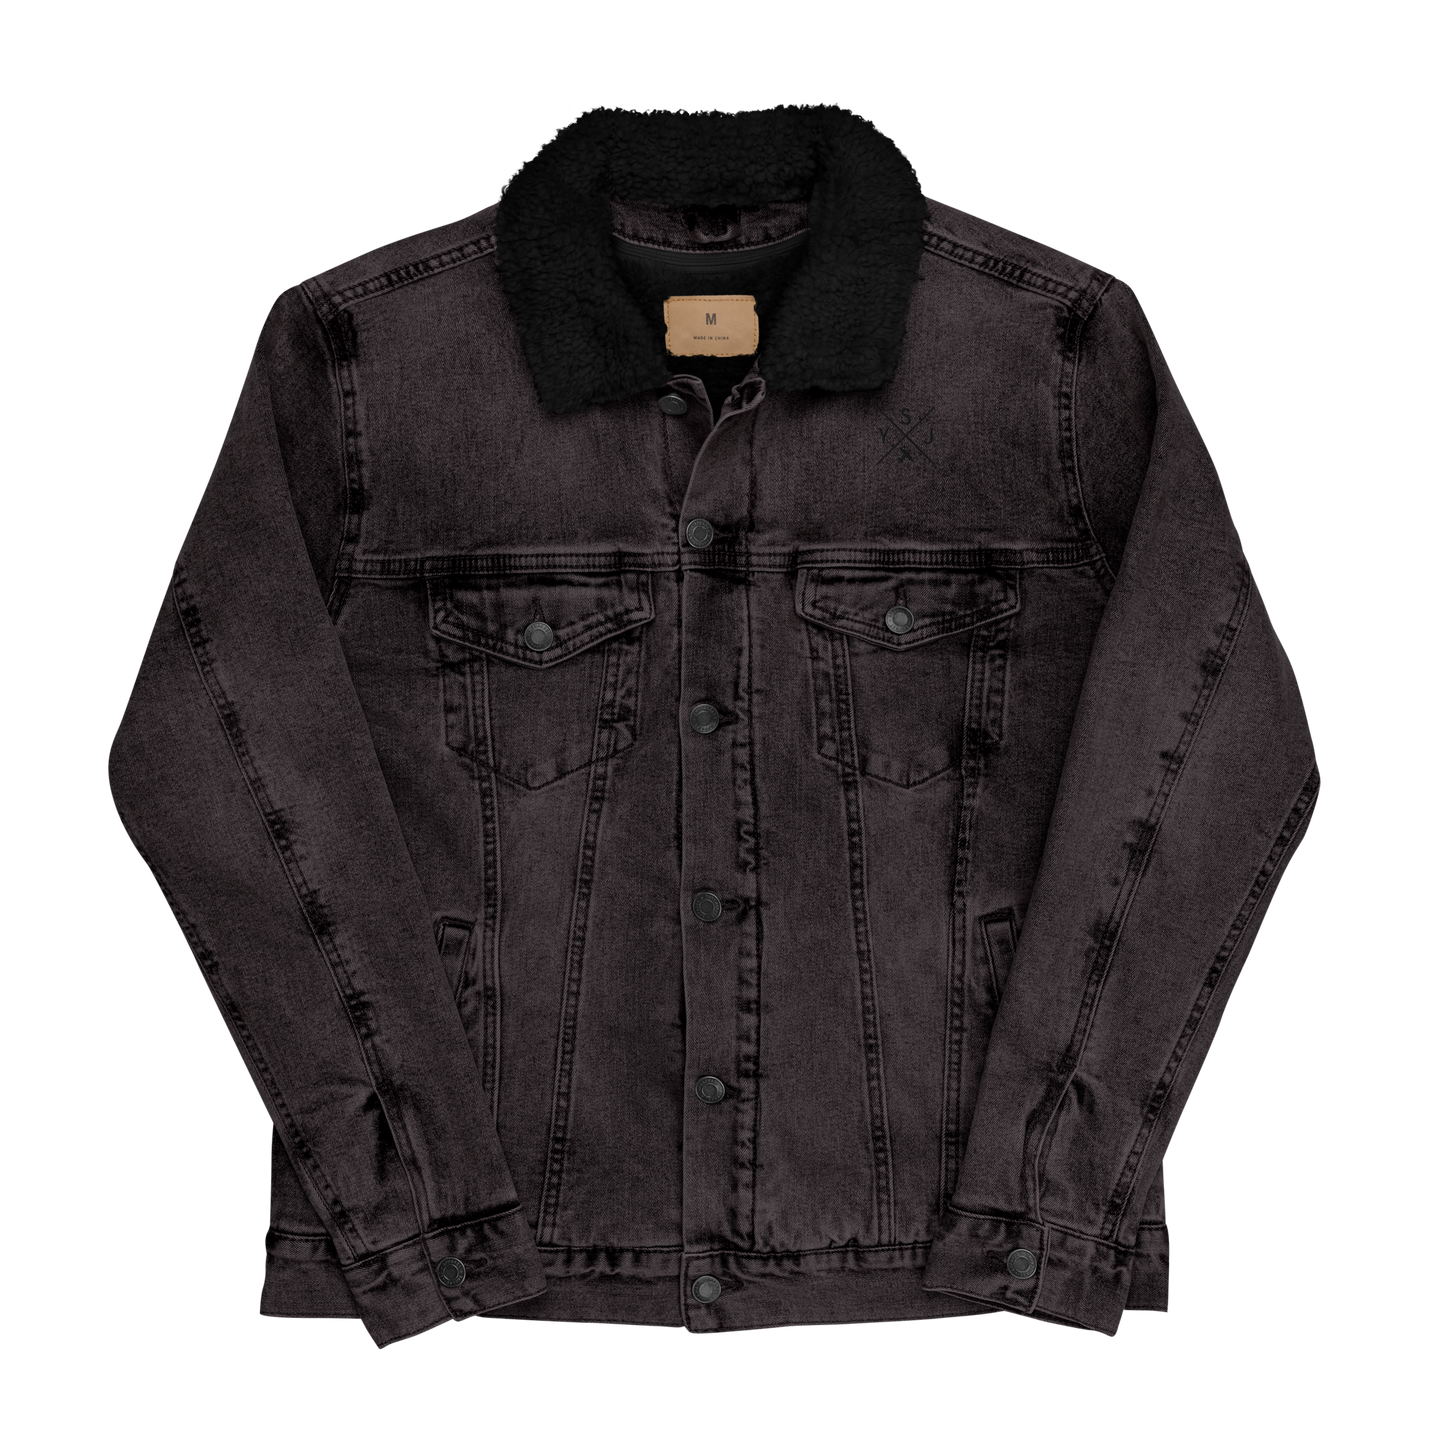 YHM Designs - YSJ Saint John Denim Sherpa Jacket - Crossed-X Design with Airport Code and Vintage Propliner - Black & White Embroidery - Image 02